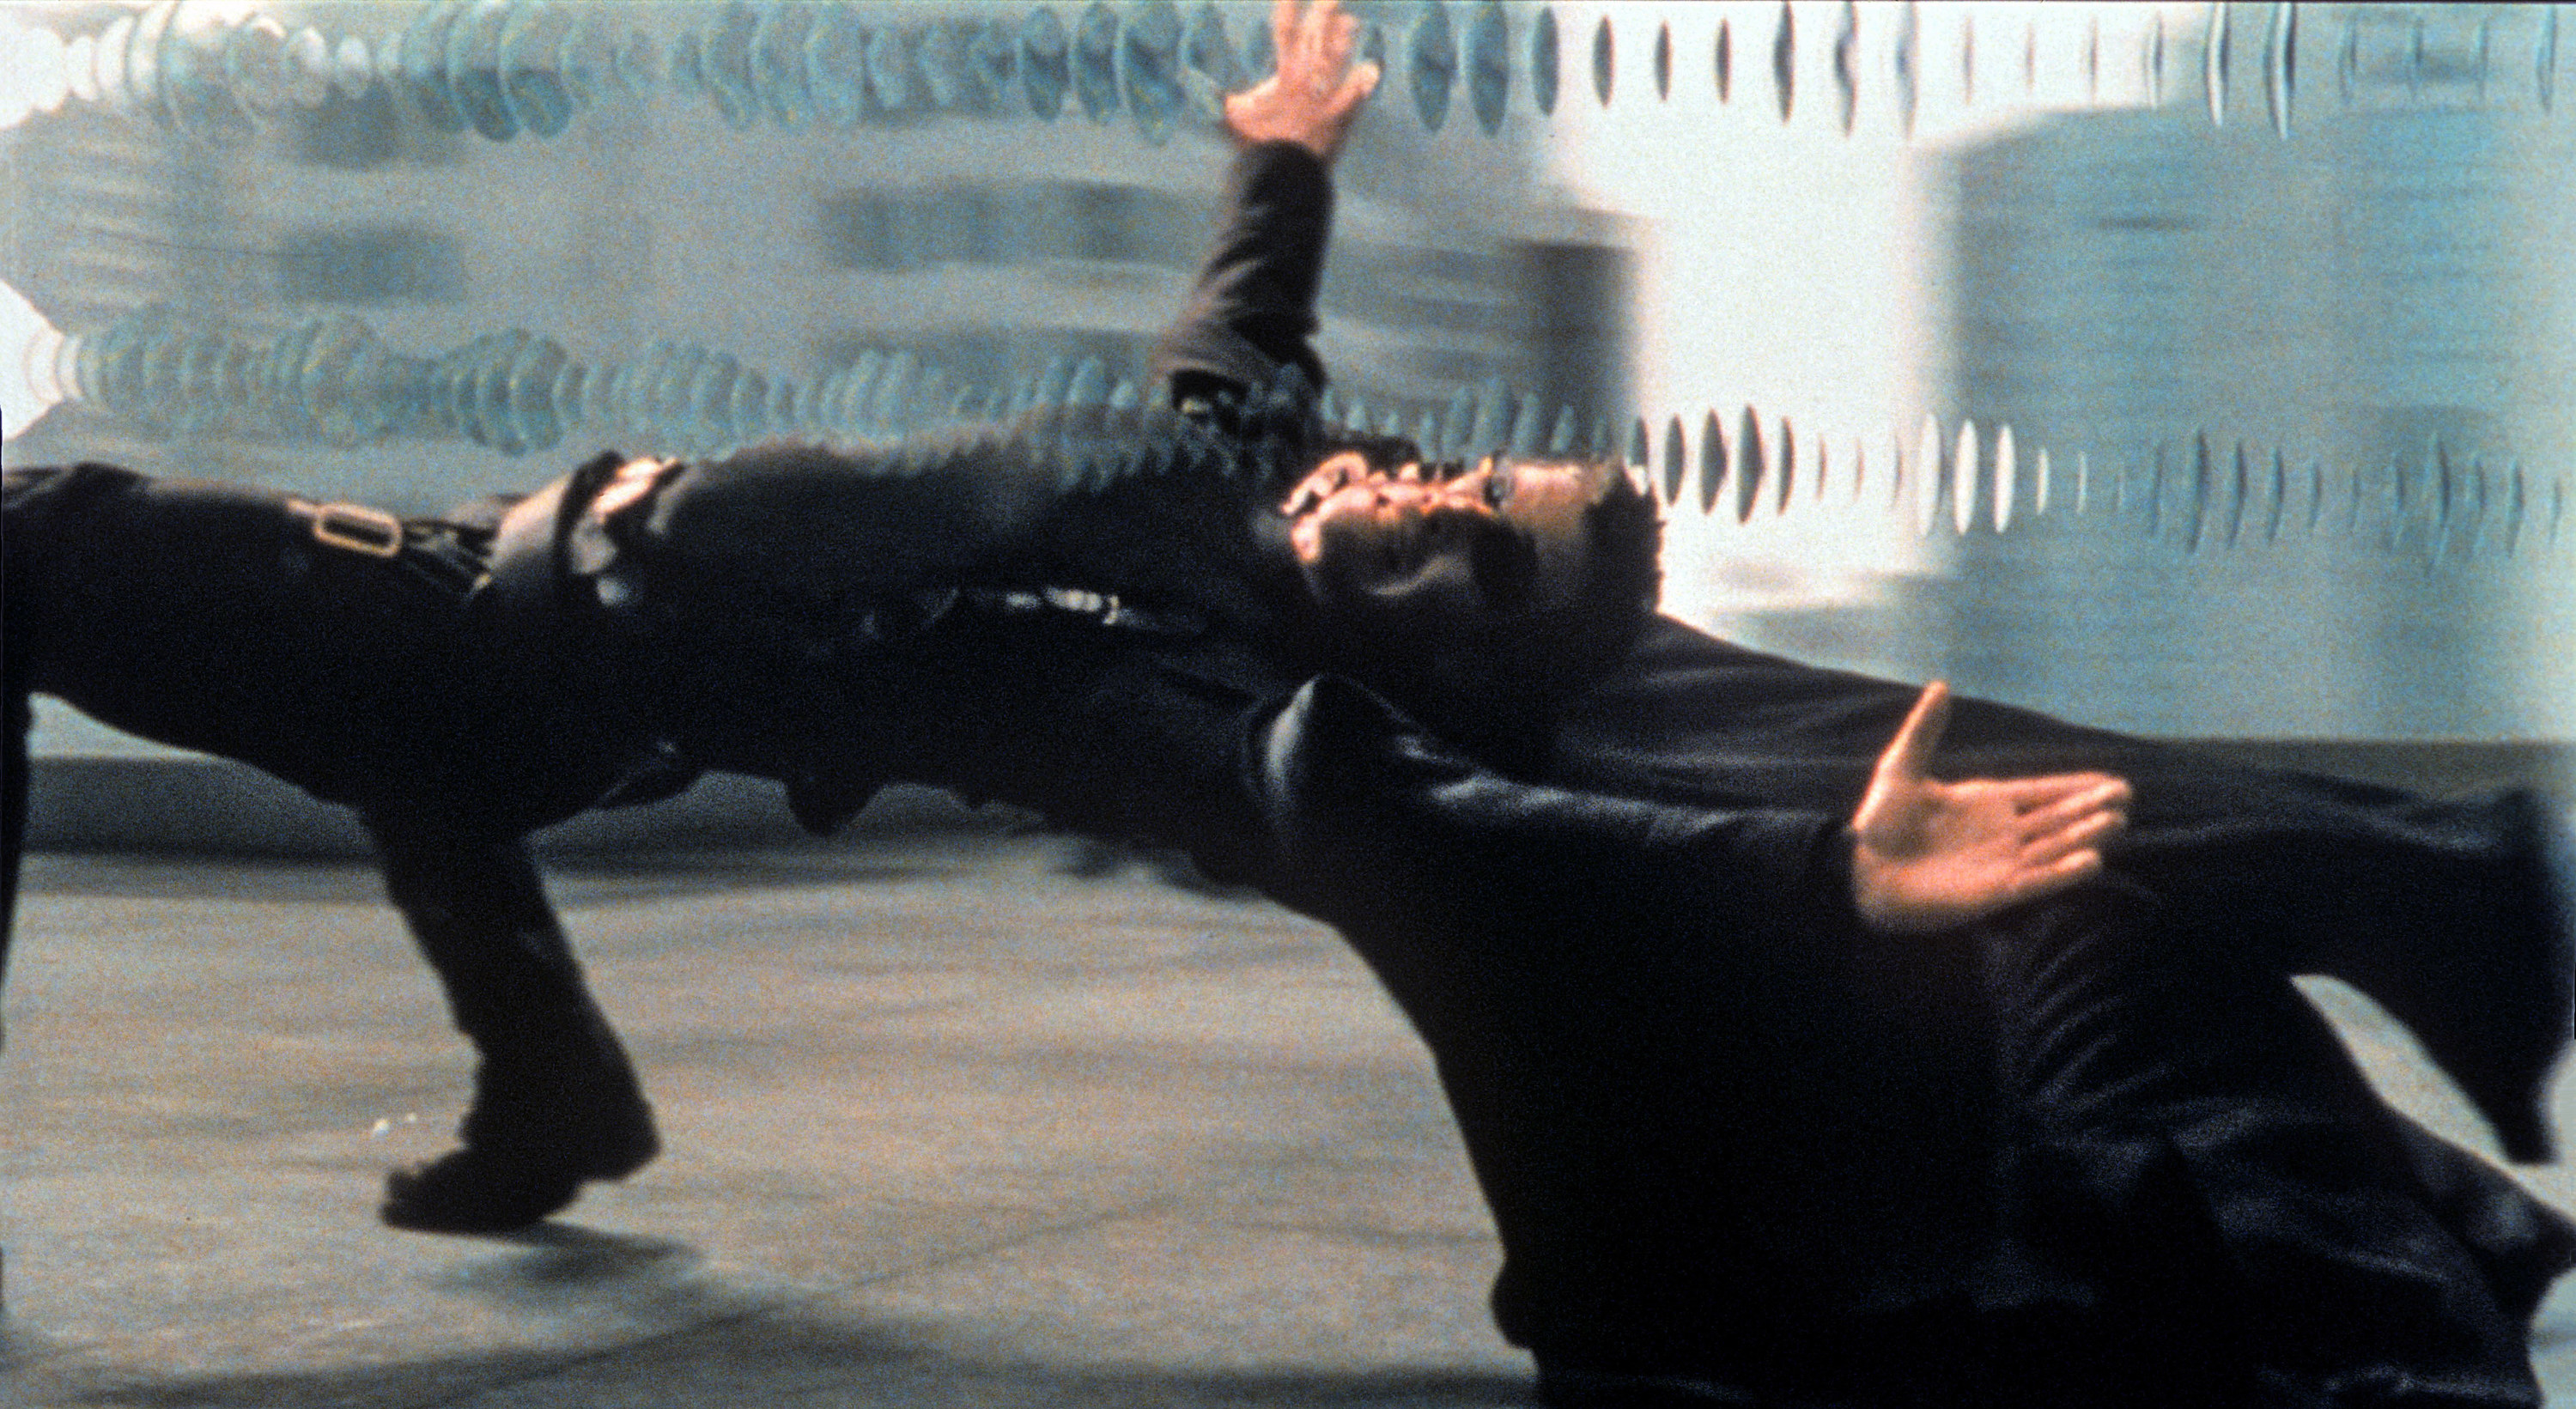 Keanu Reeves as Neo, bending backwards, dodging bullets in slow motion